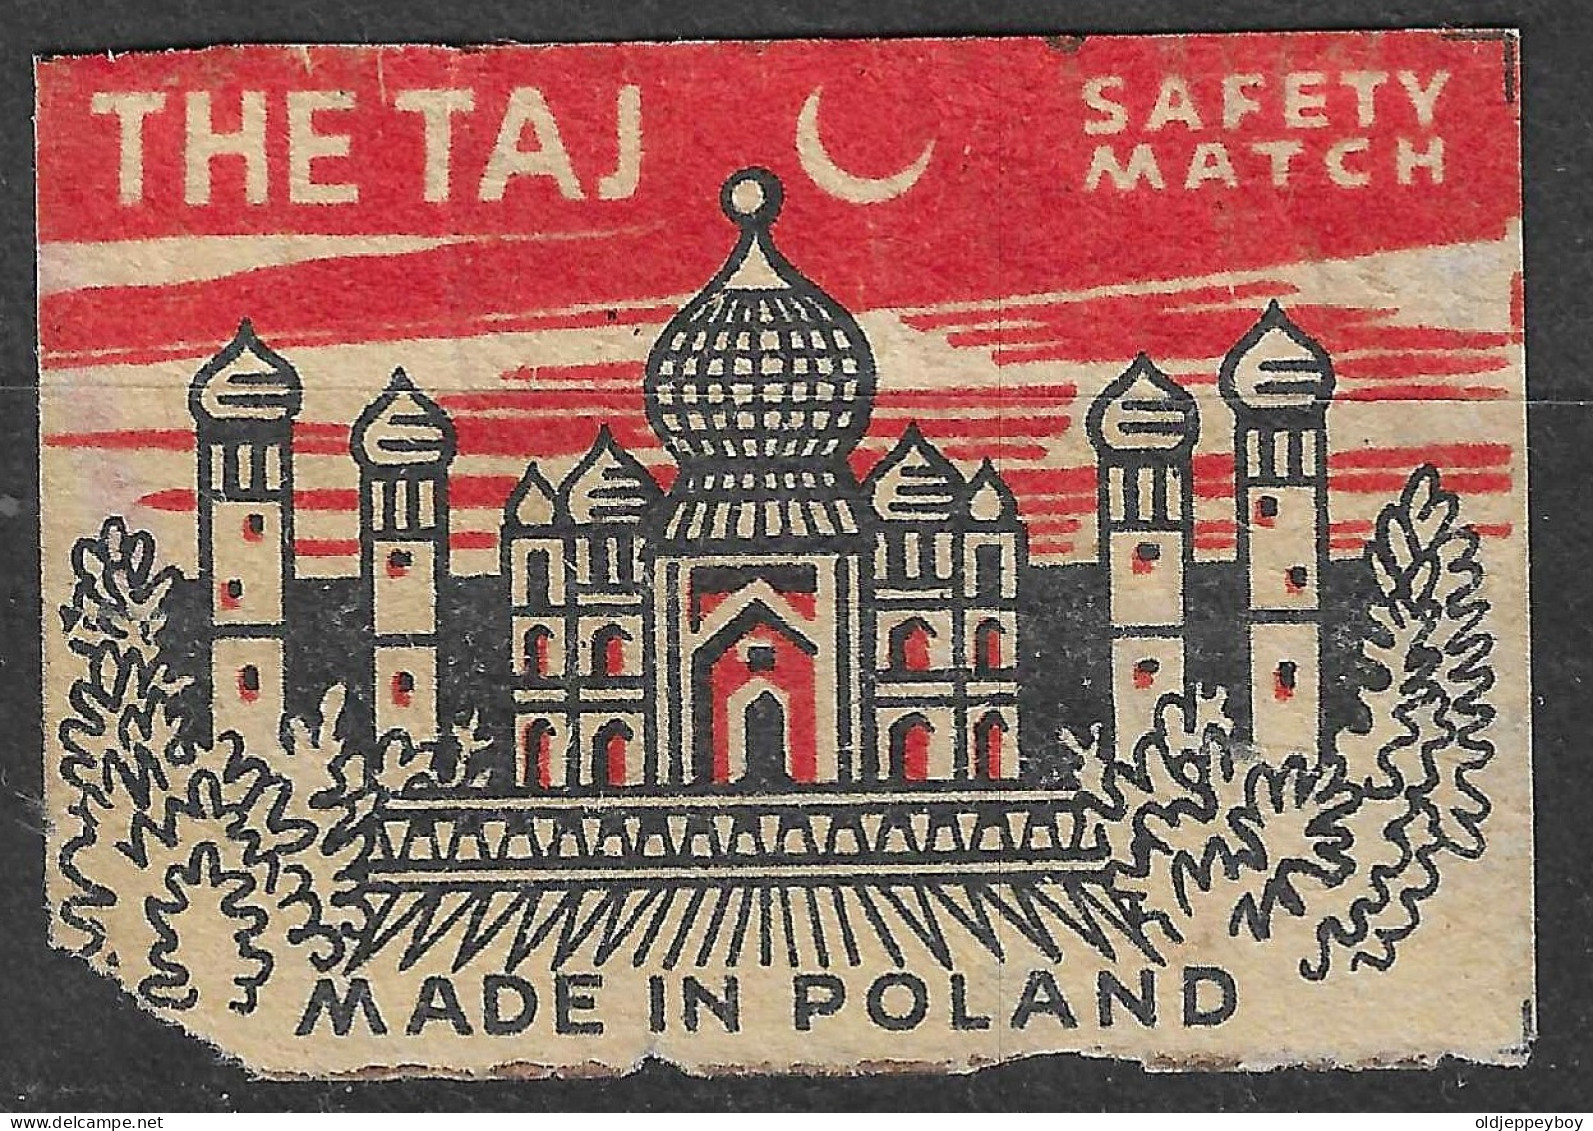  Phillumeny MATCHBOX LABEL Made In Poland, 1950’s/1960’s  THE TAJ MAHAL  3.5 X 5 Cm - Boites D'allumettes - Etiquettes